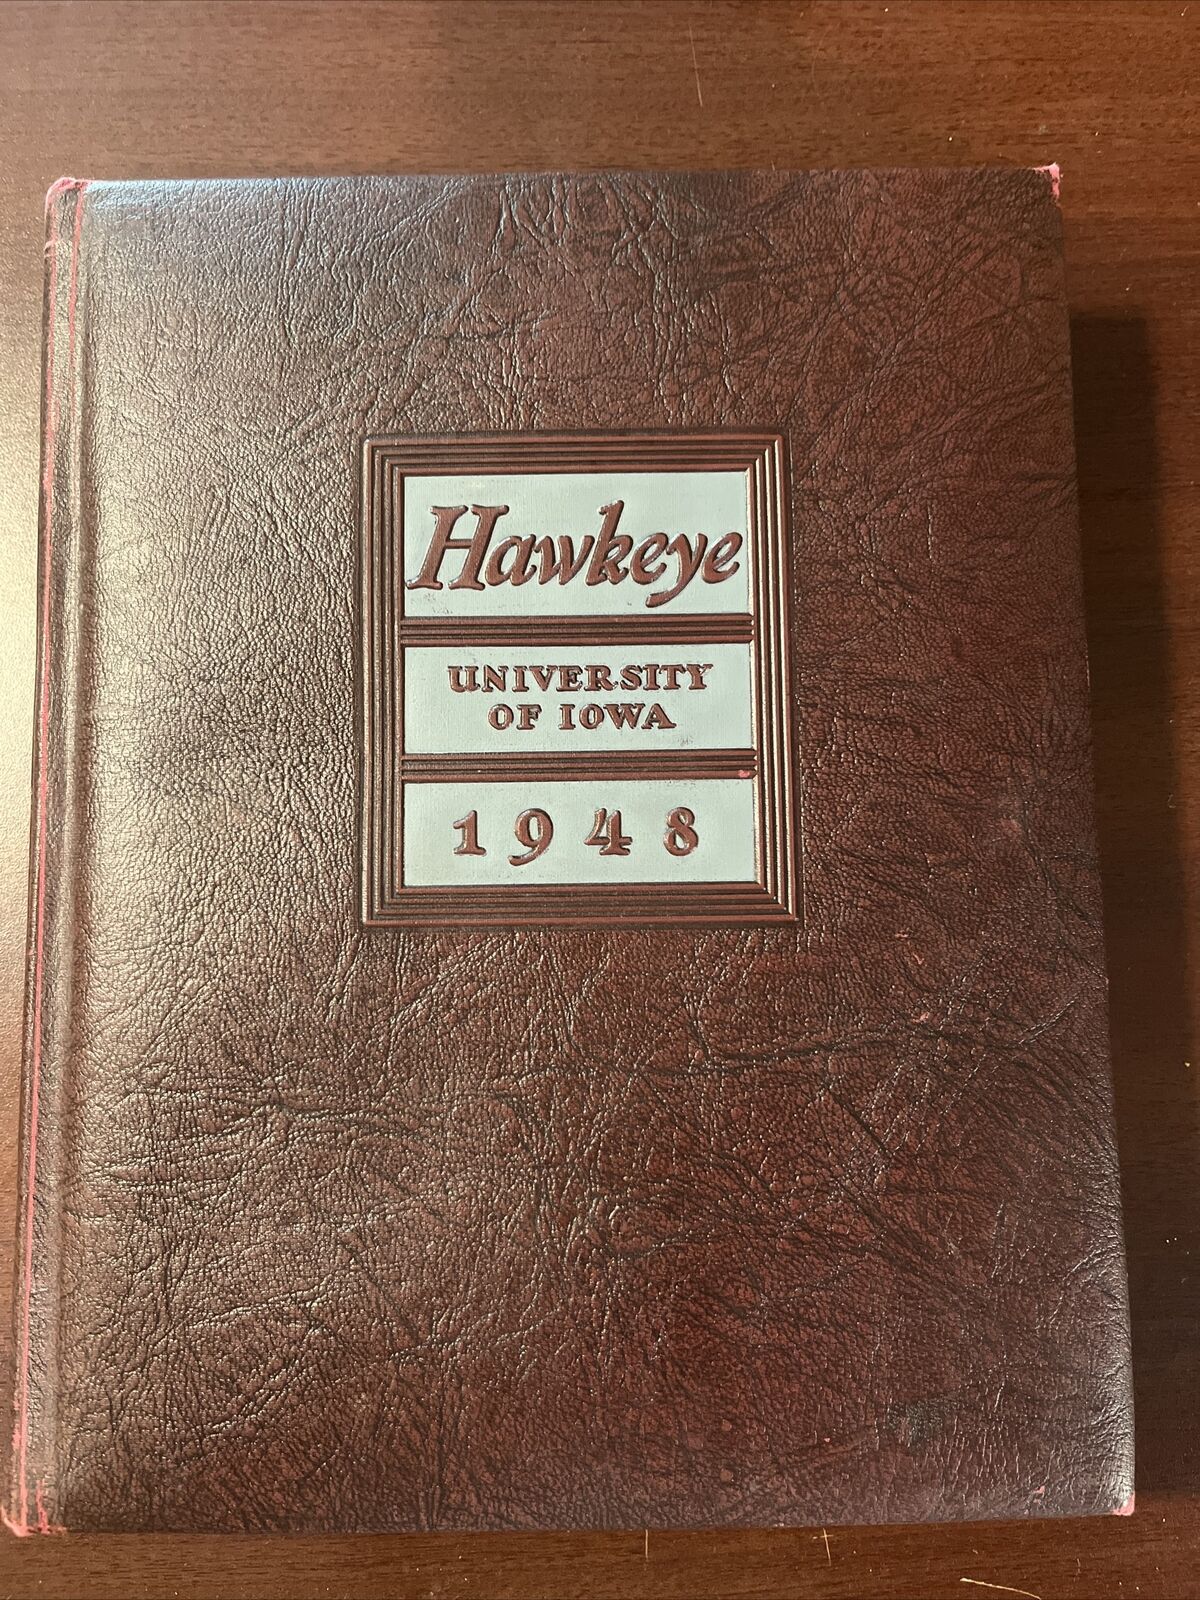 The 1948 Hawkeye - University Of Iowa Yearbook Very Nice Condition